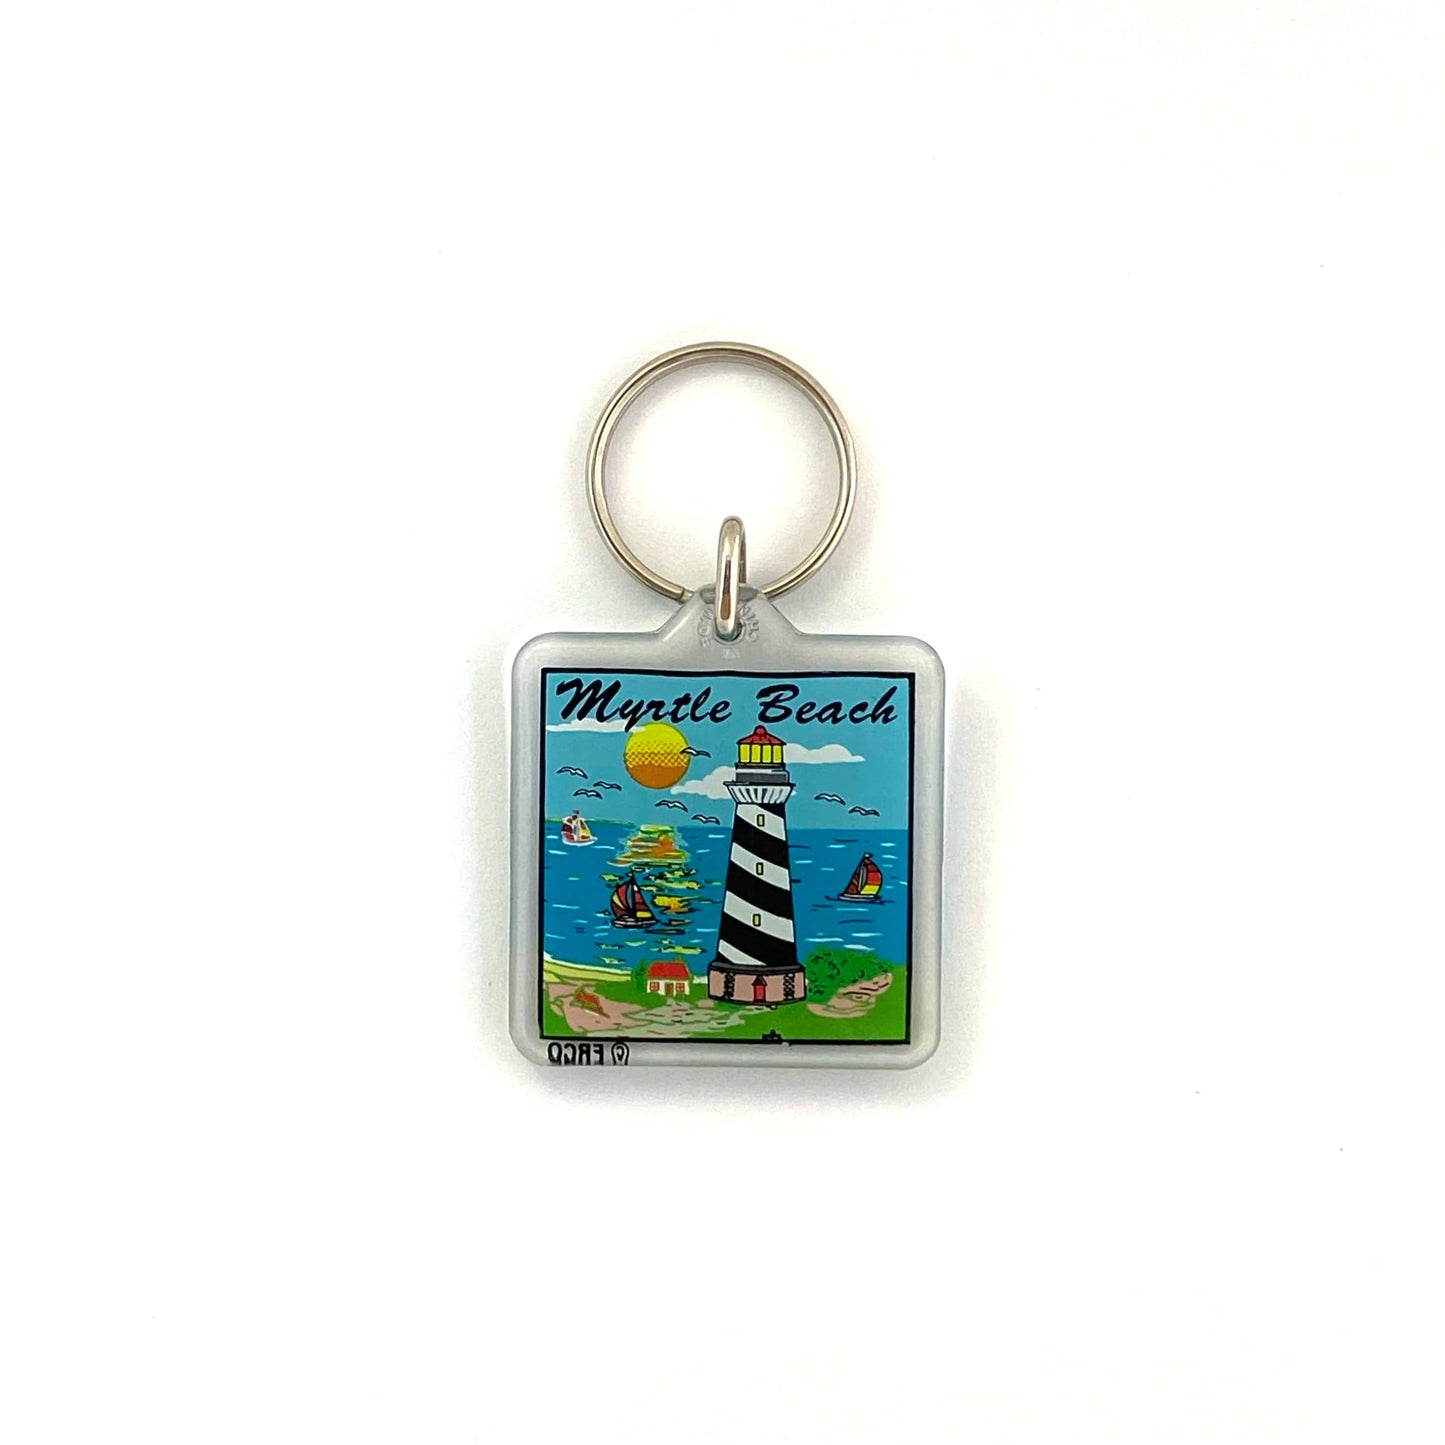 “Myrtle Beach” Travel Souvenir Acrylic Keychain Key Ring Square Lighthouse Sailboats